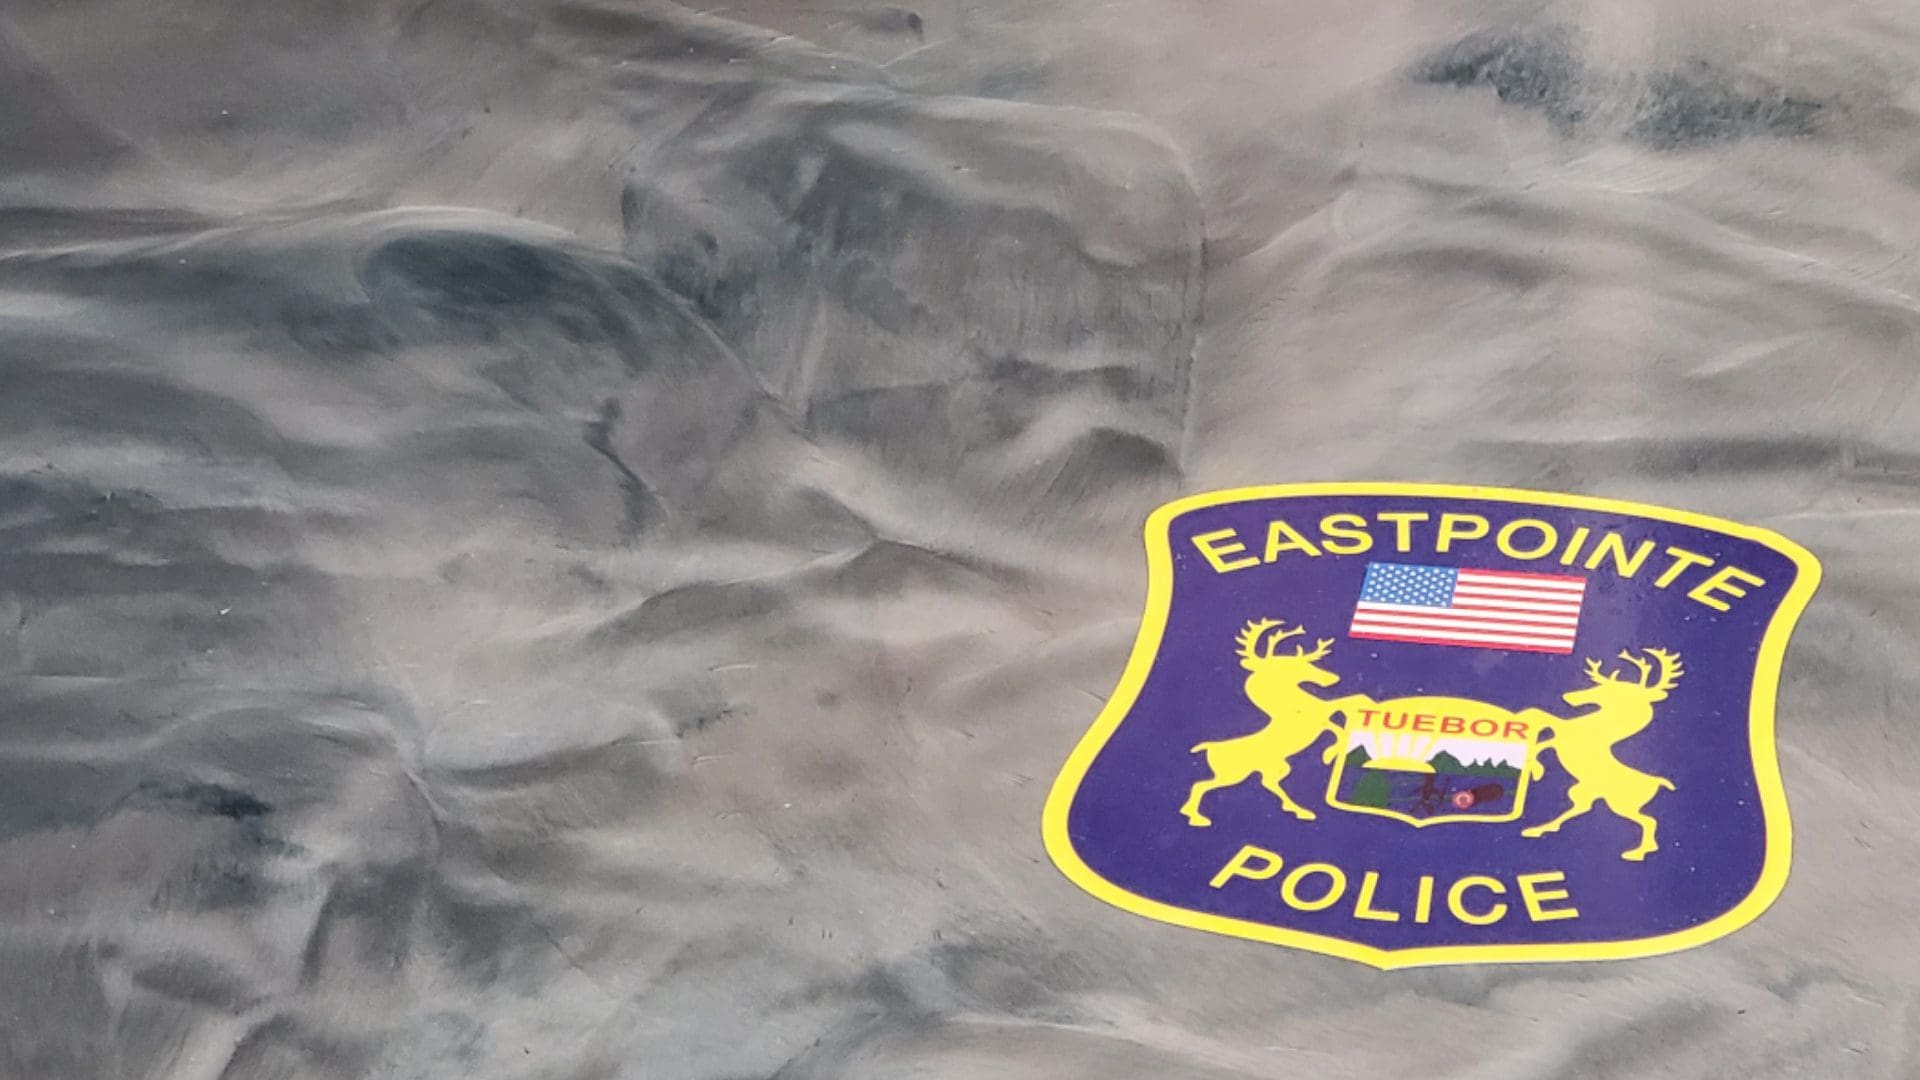 Eastpointe Police Epoxy Floor Graphic 4